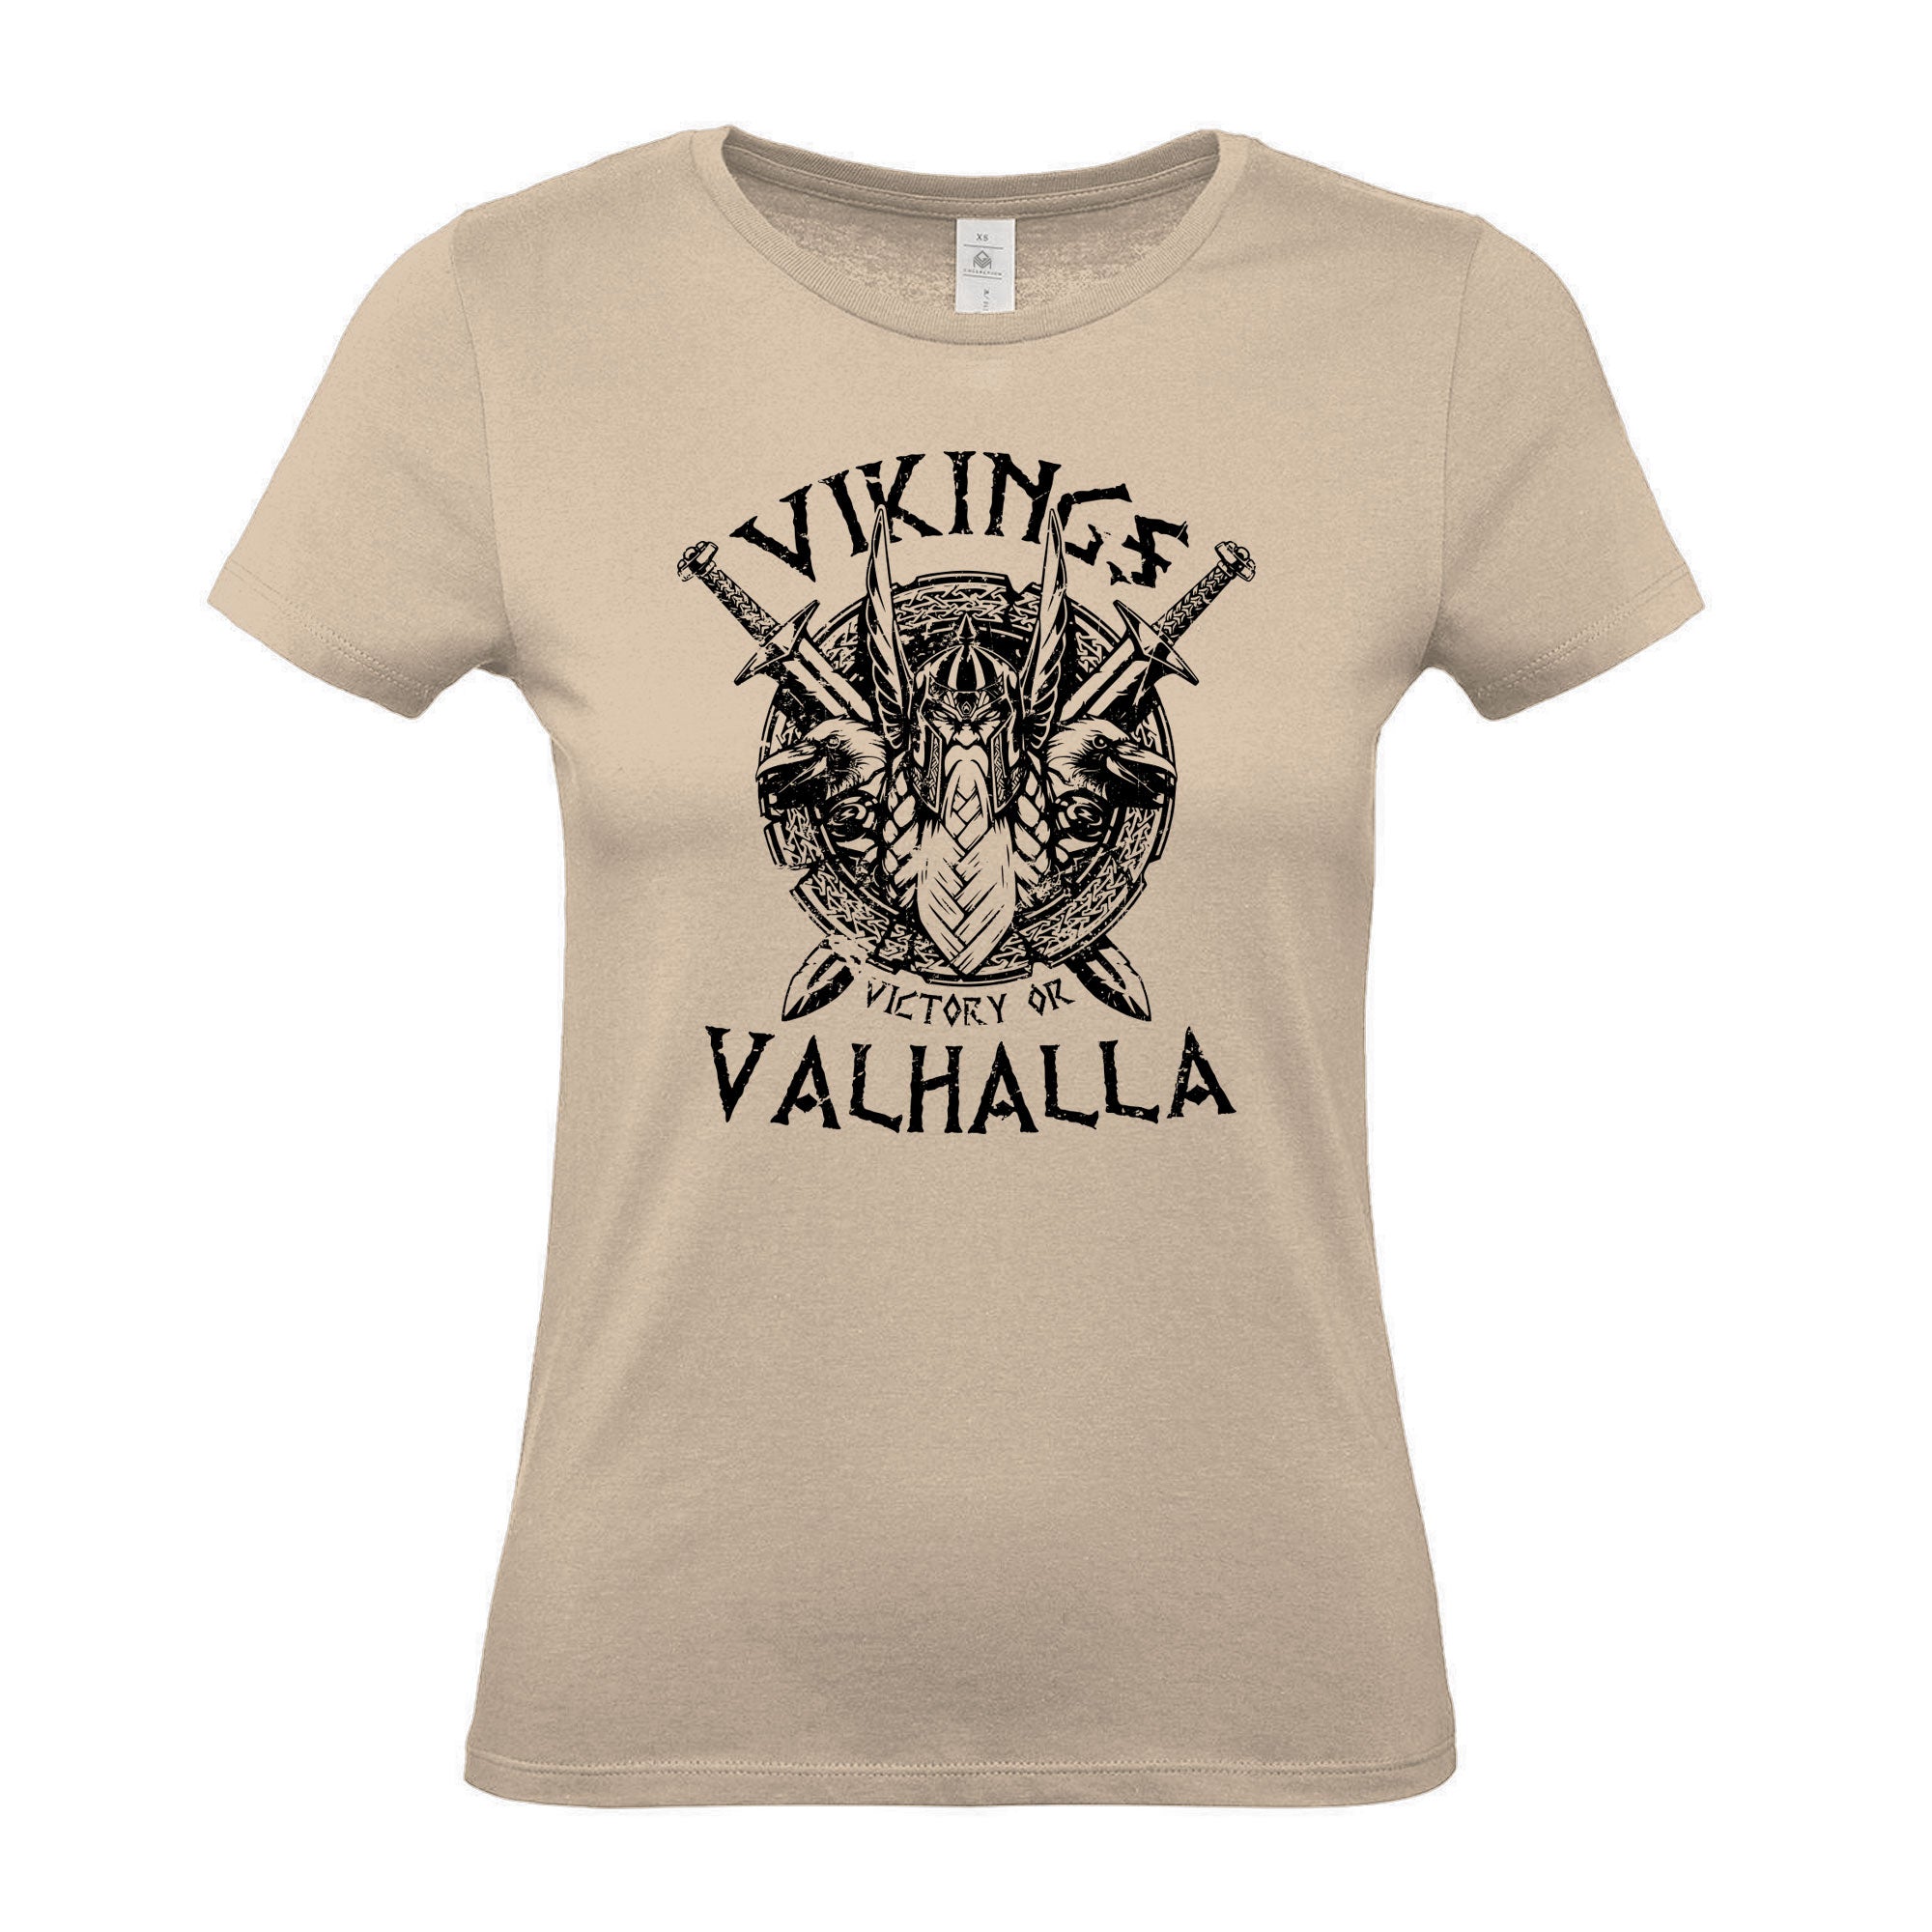 Victory Or Valhalla - Women's Gym T-Shirt